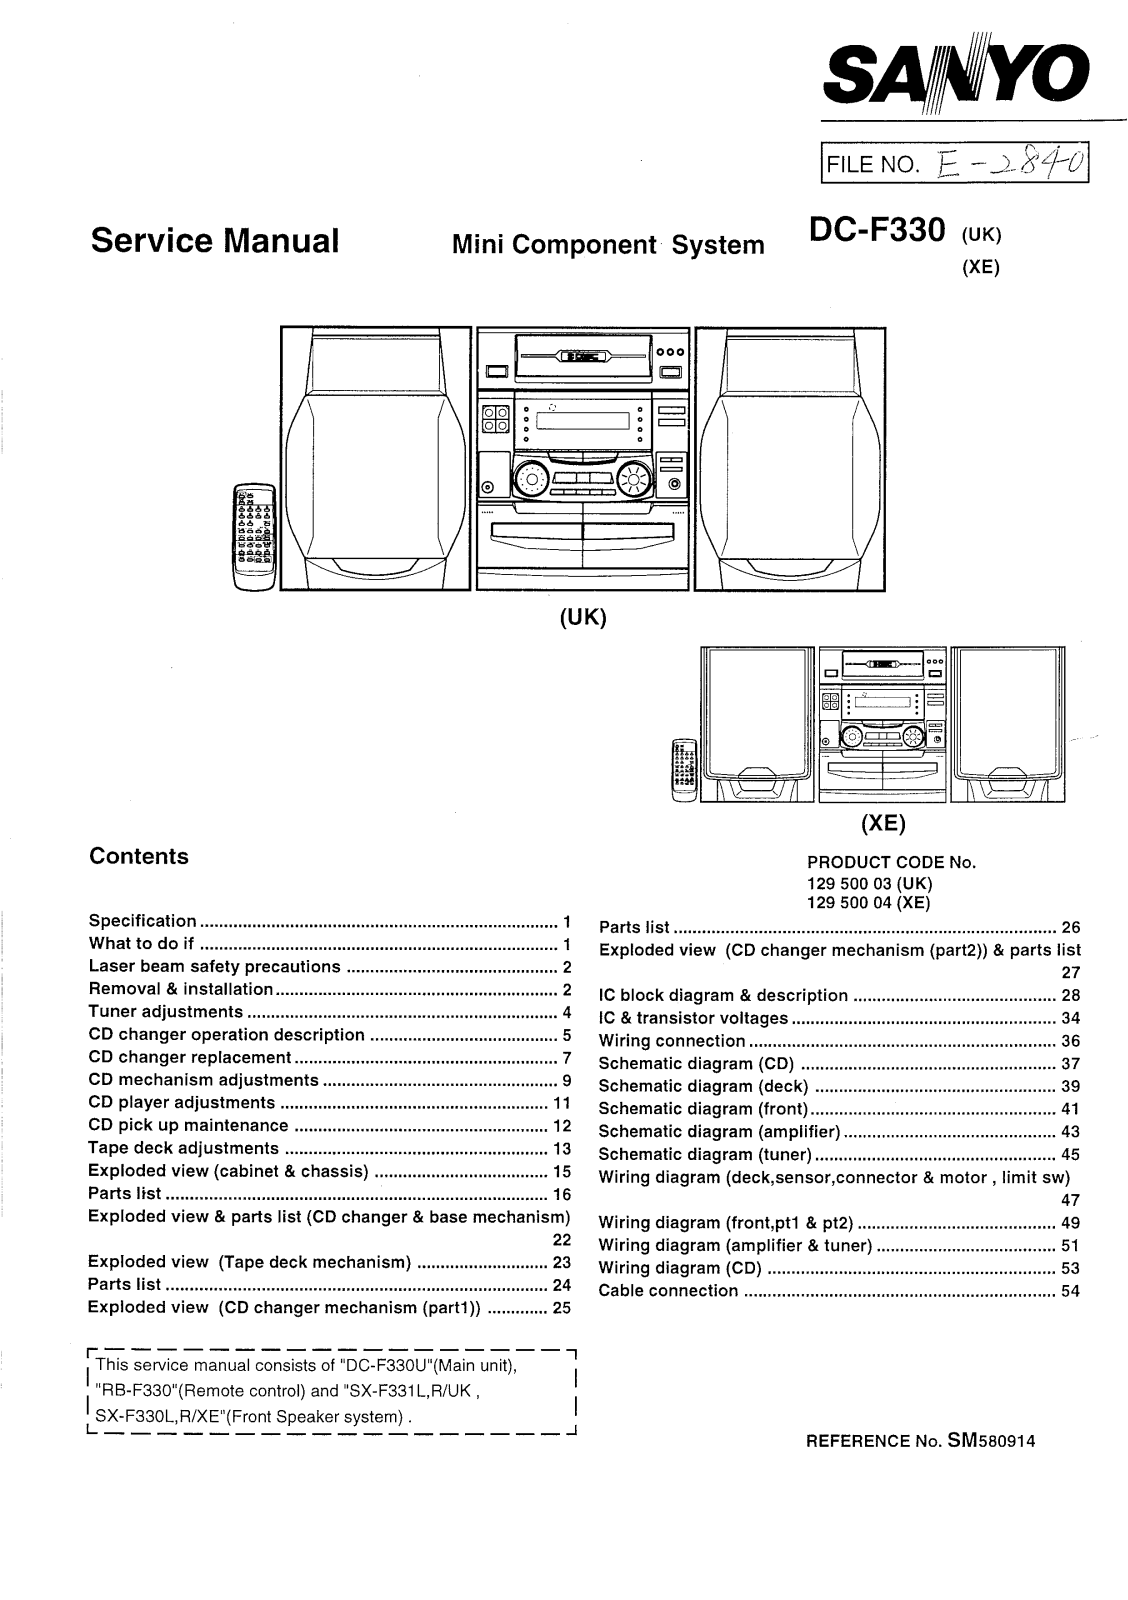 Sanyo DCF-330 Service manual